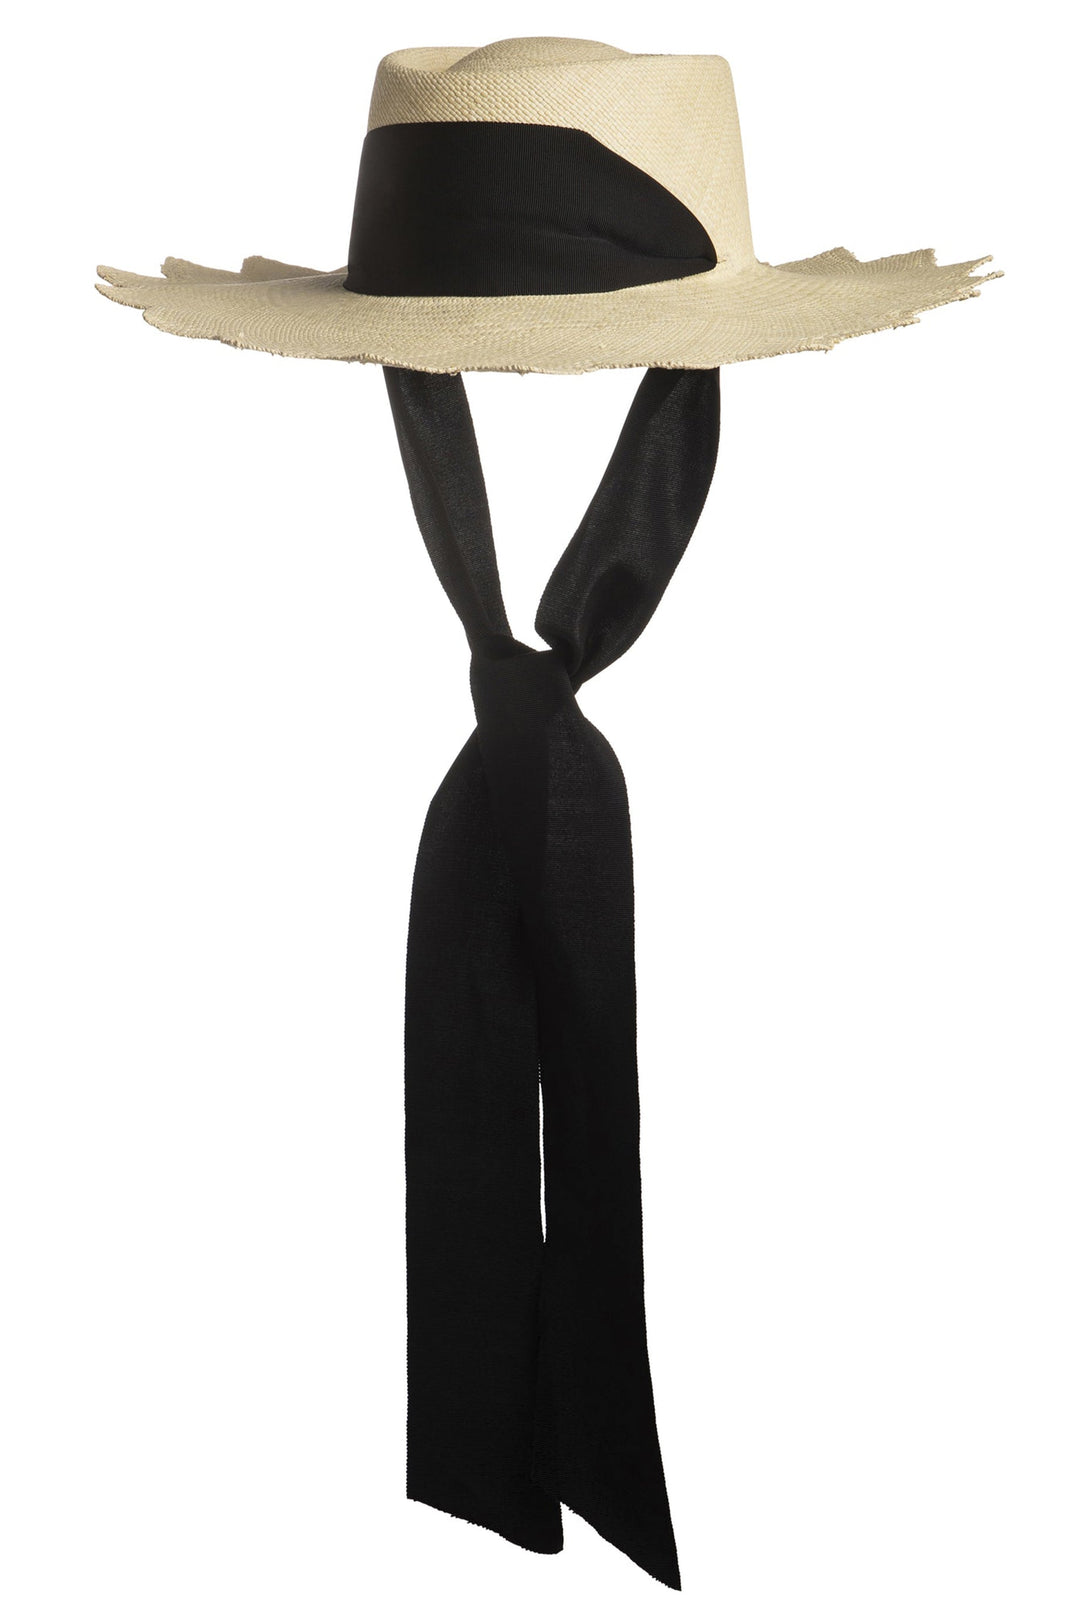 Sarah J Curtis Scallop Hat - Black